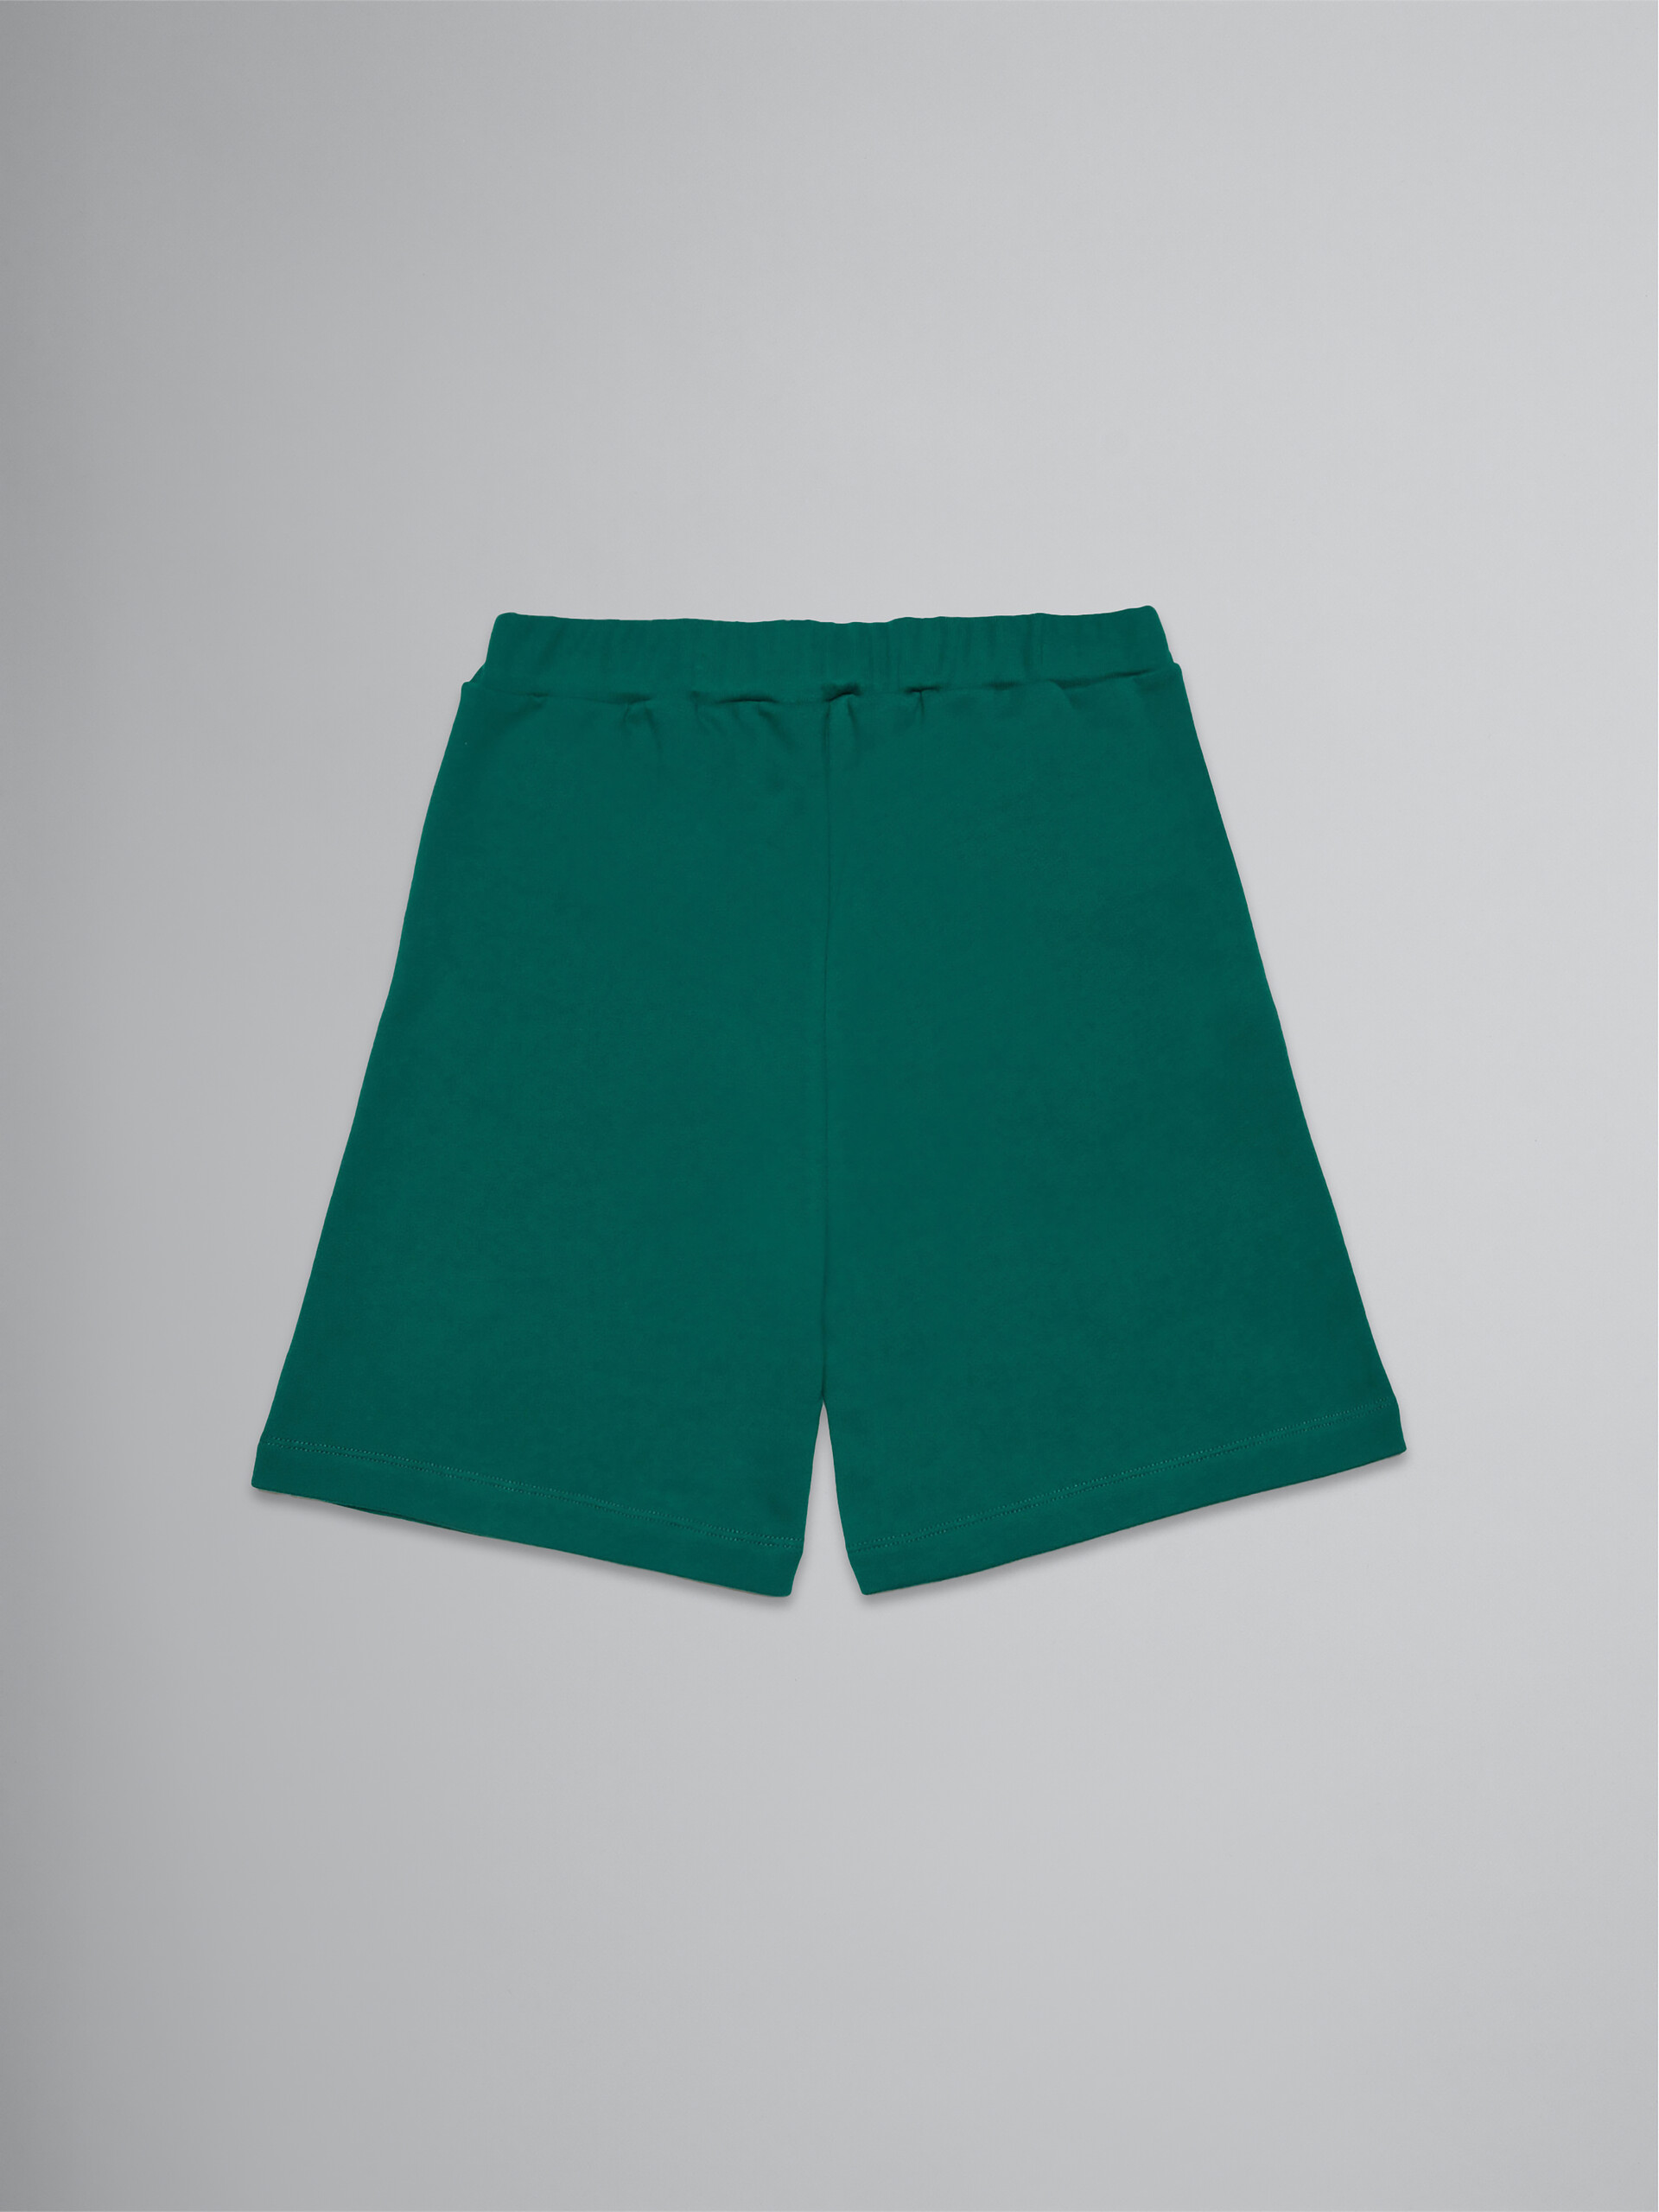 Shorts verdi in felpa con logo - Pantaloni - Image 2